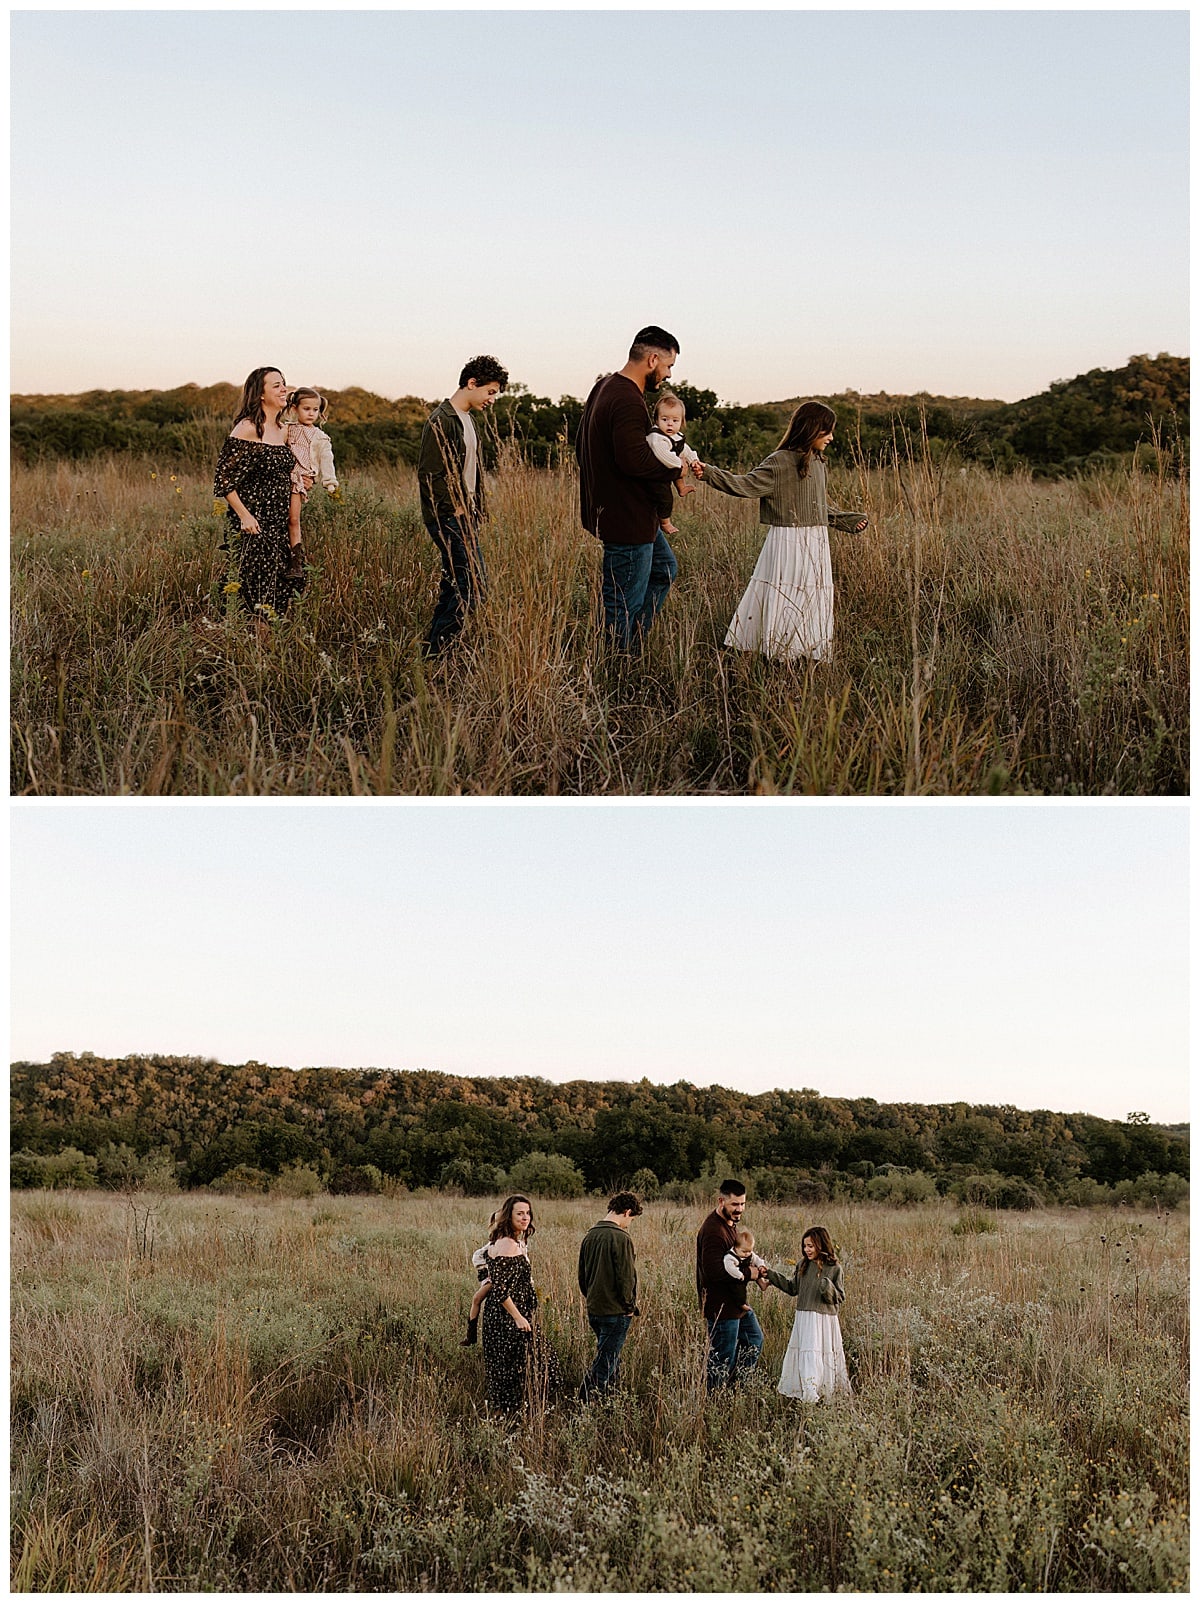 Family walk through the open field for Austin Lifestyle Photographer